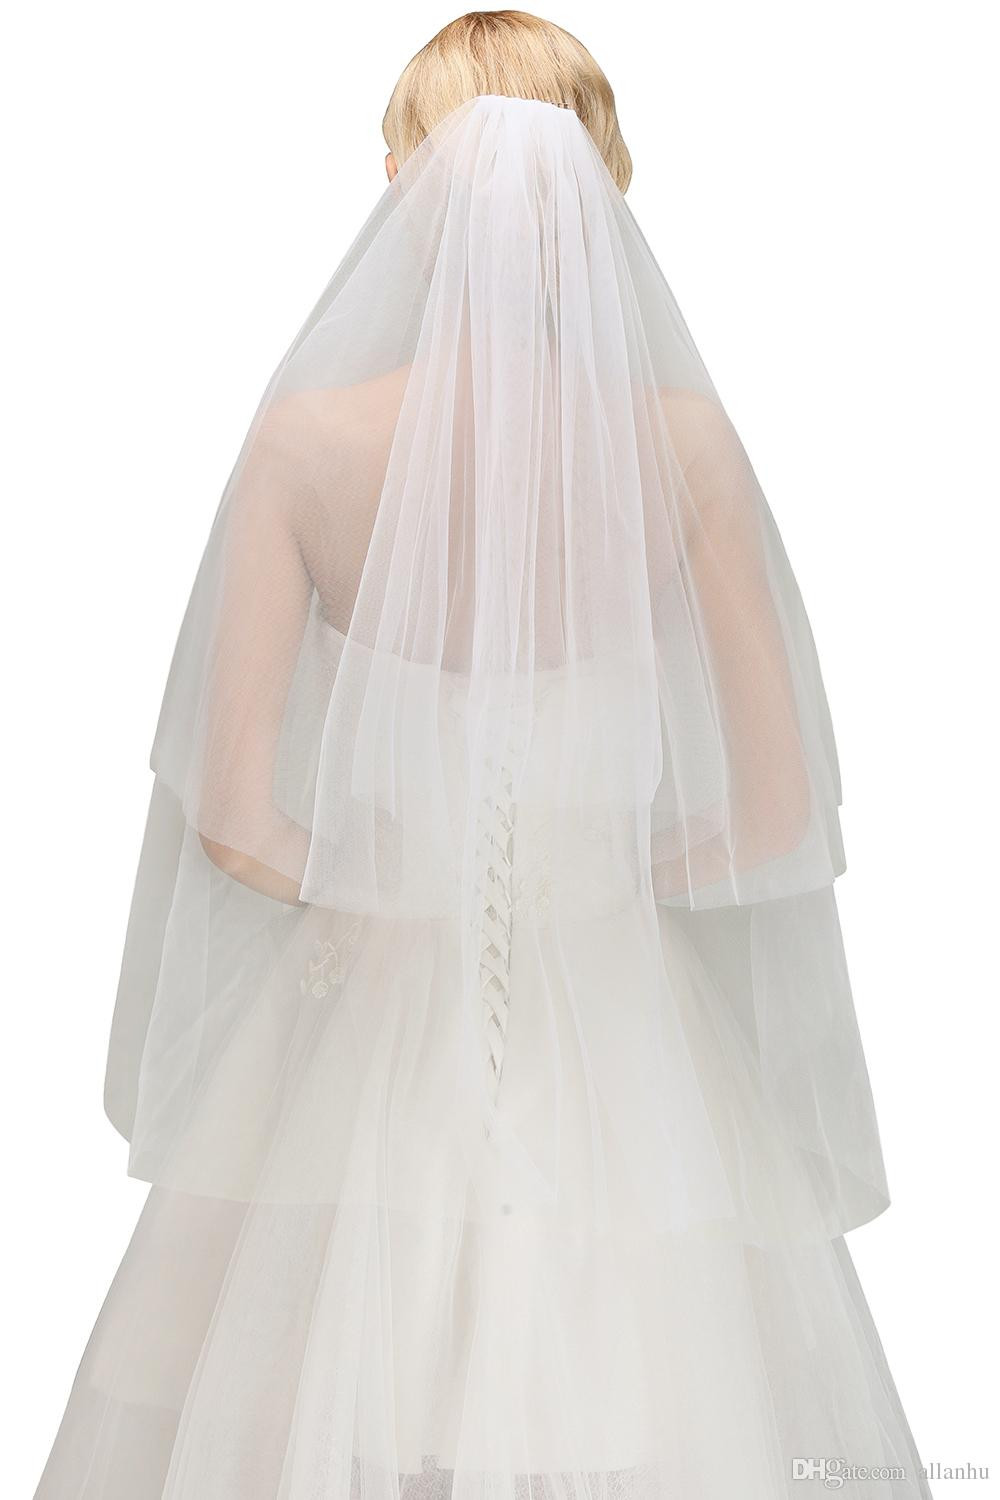 Used Wedding Veil
 ly $6 99 Wedding Bikini Veil Two Layers Cheap 2019